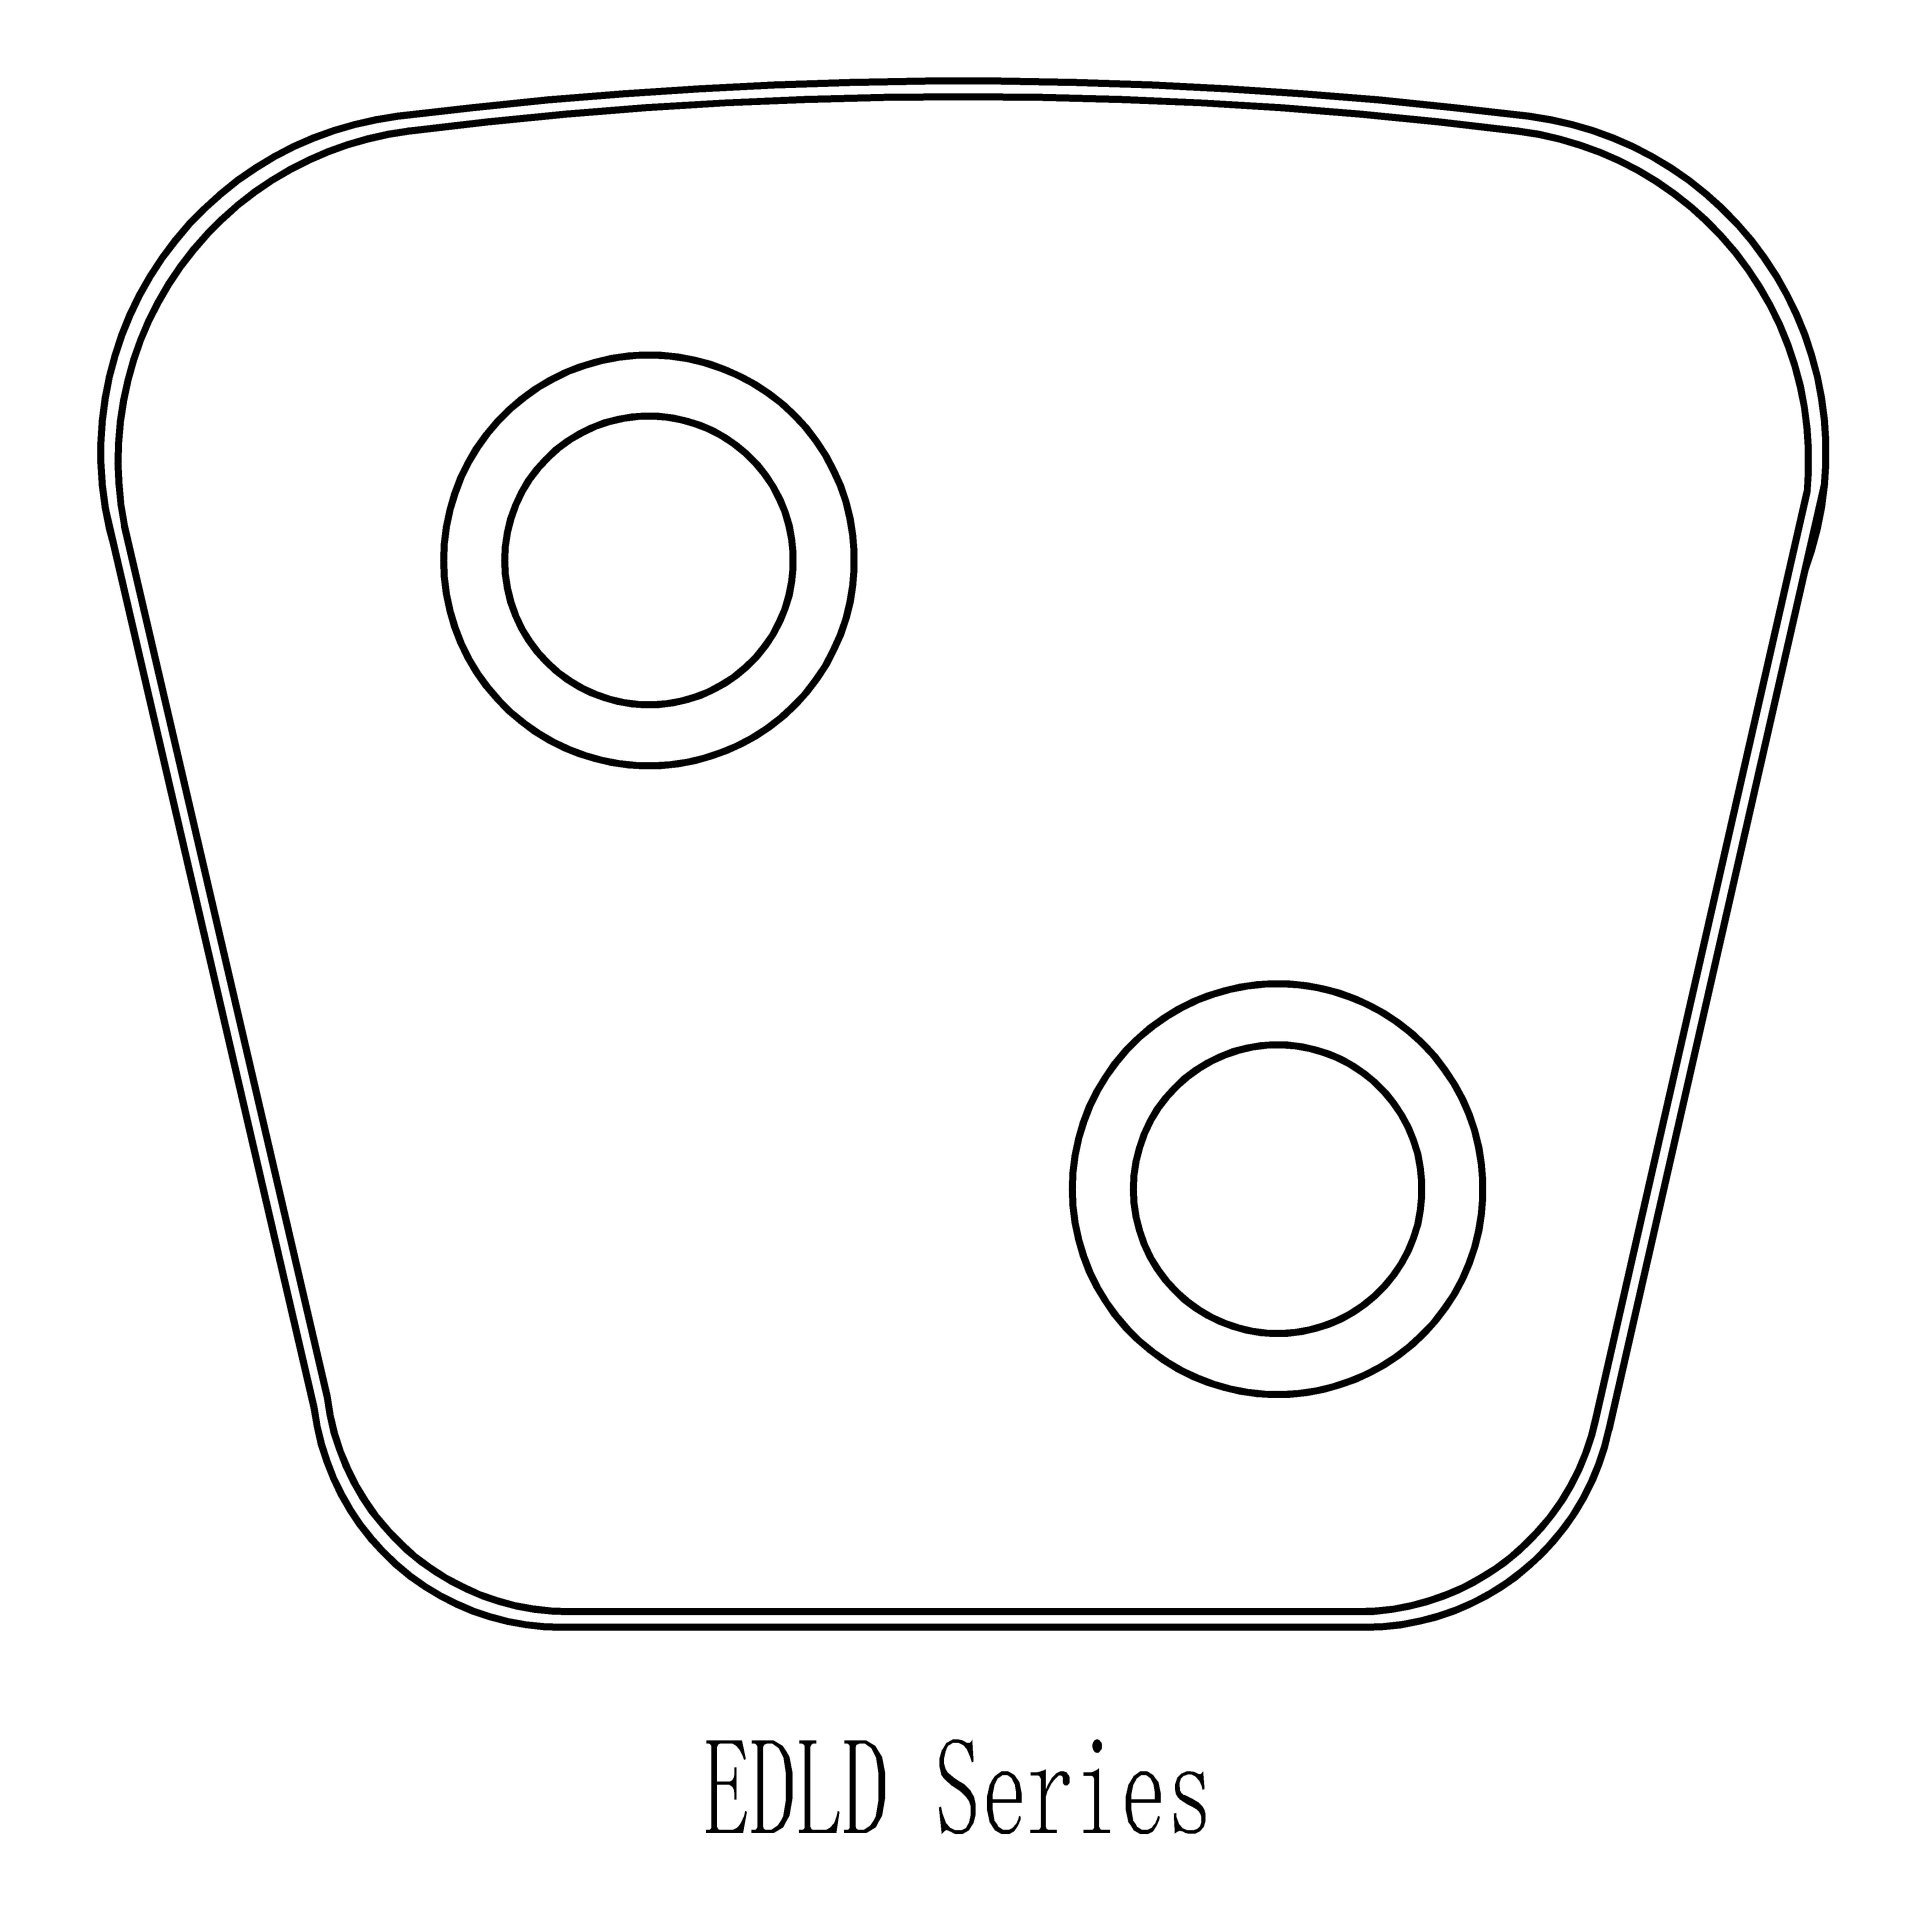 EDLD series